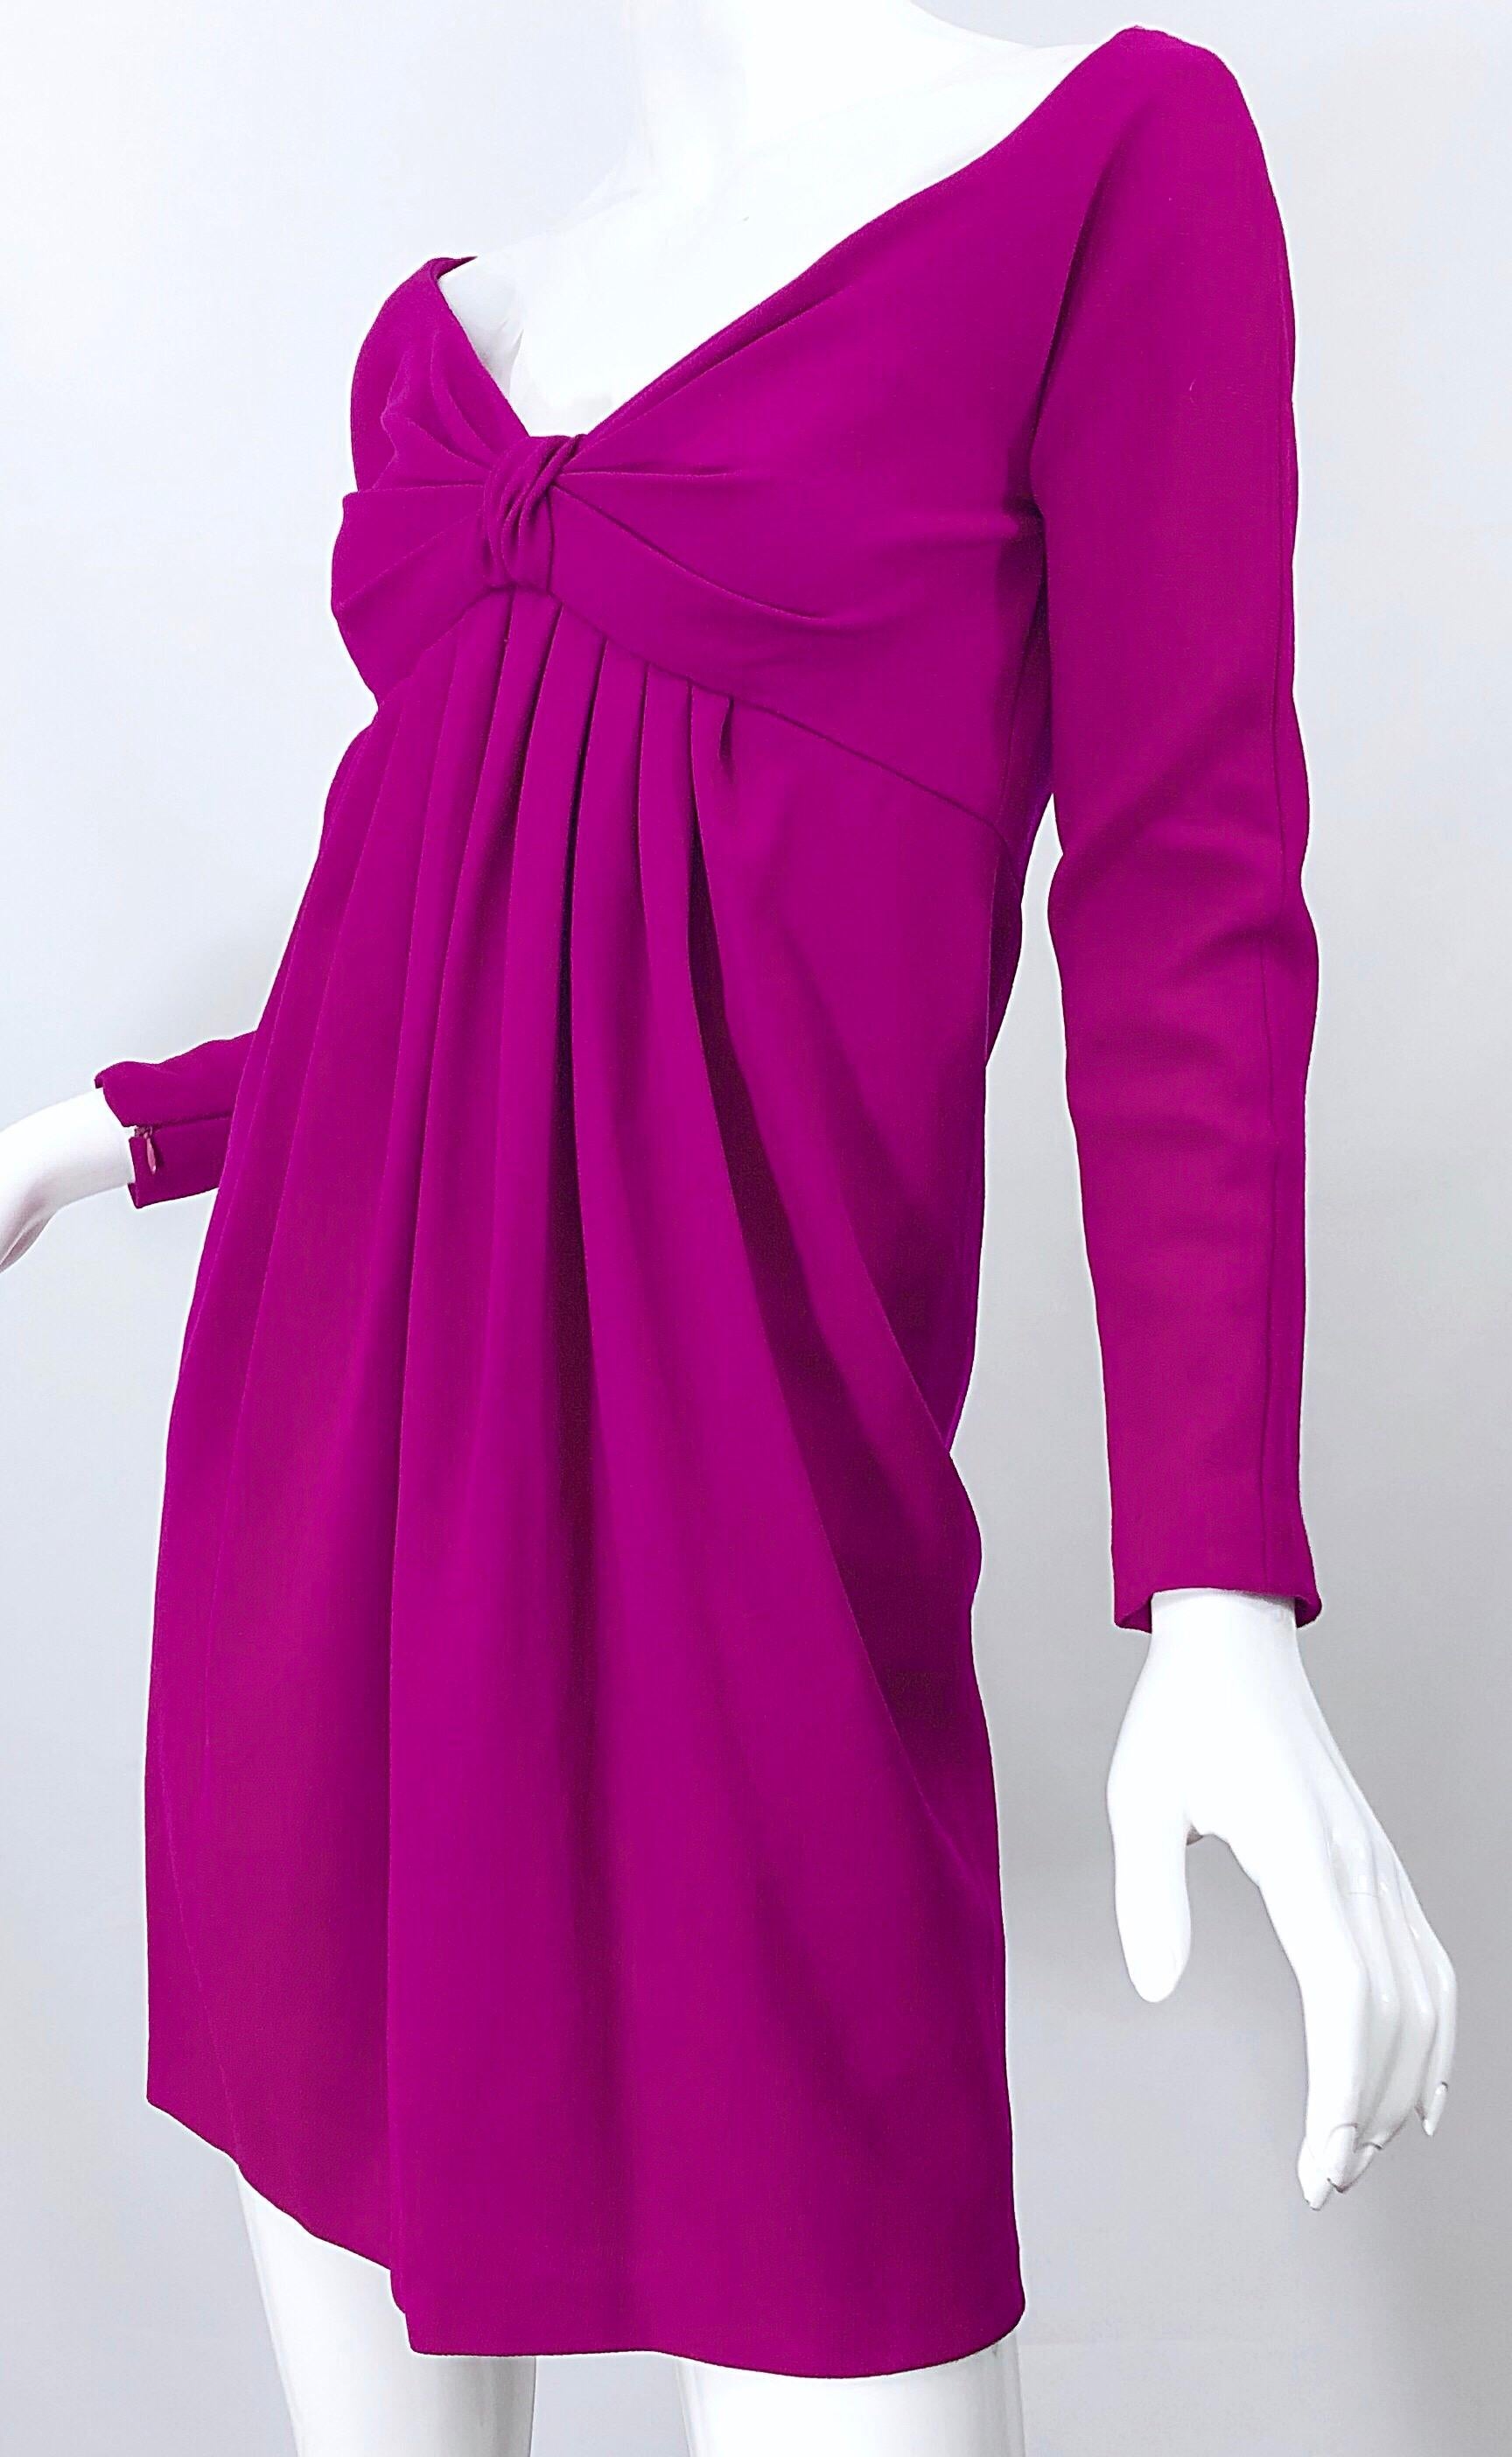 Carolyne Roehm 1990s Fuchsia Hot Pink Wool Vintage 90s Mini Empire Dress For Sale 7